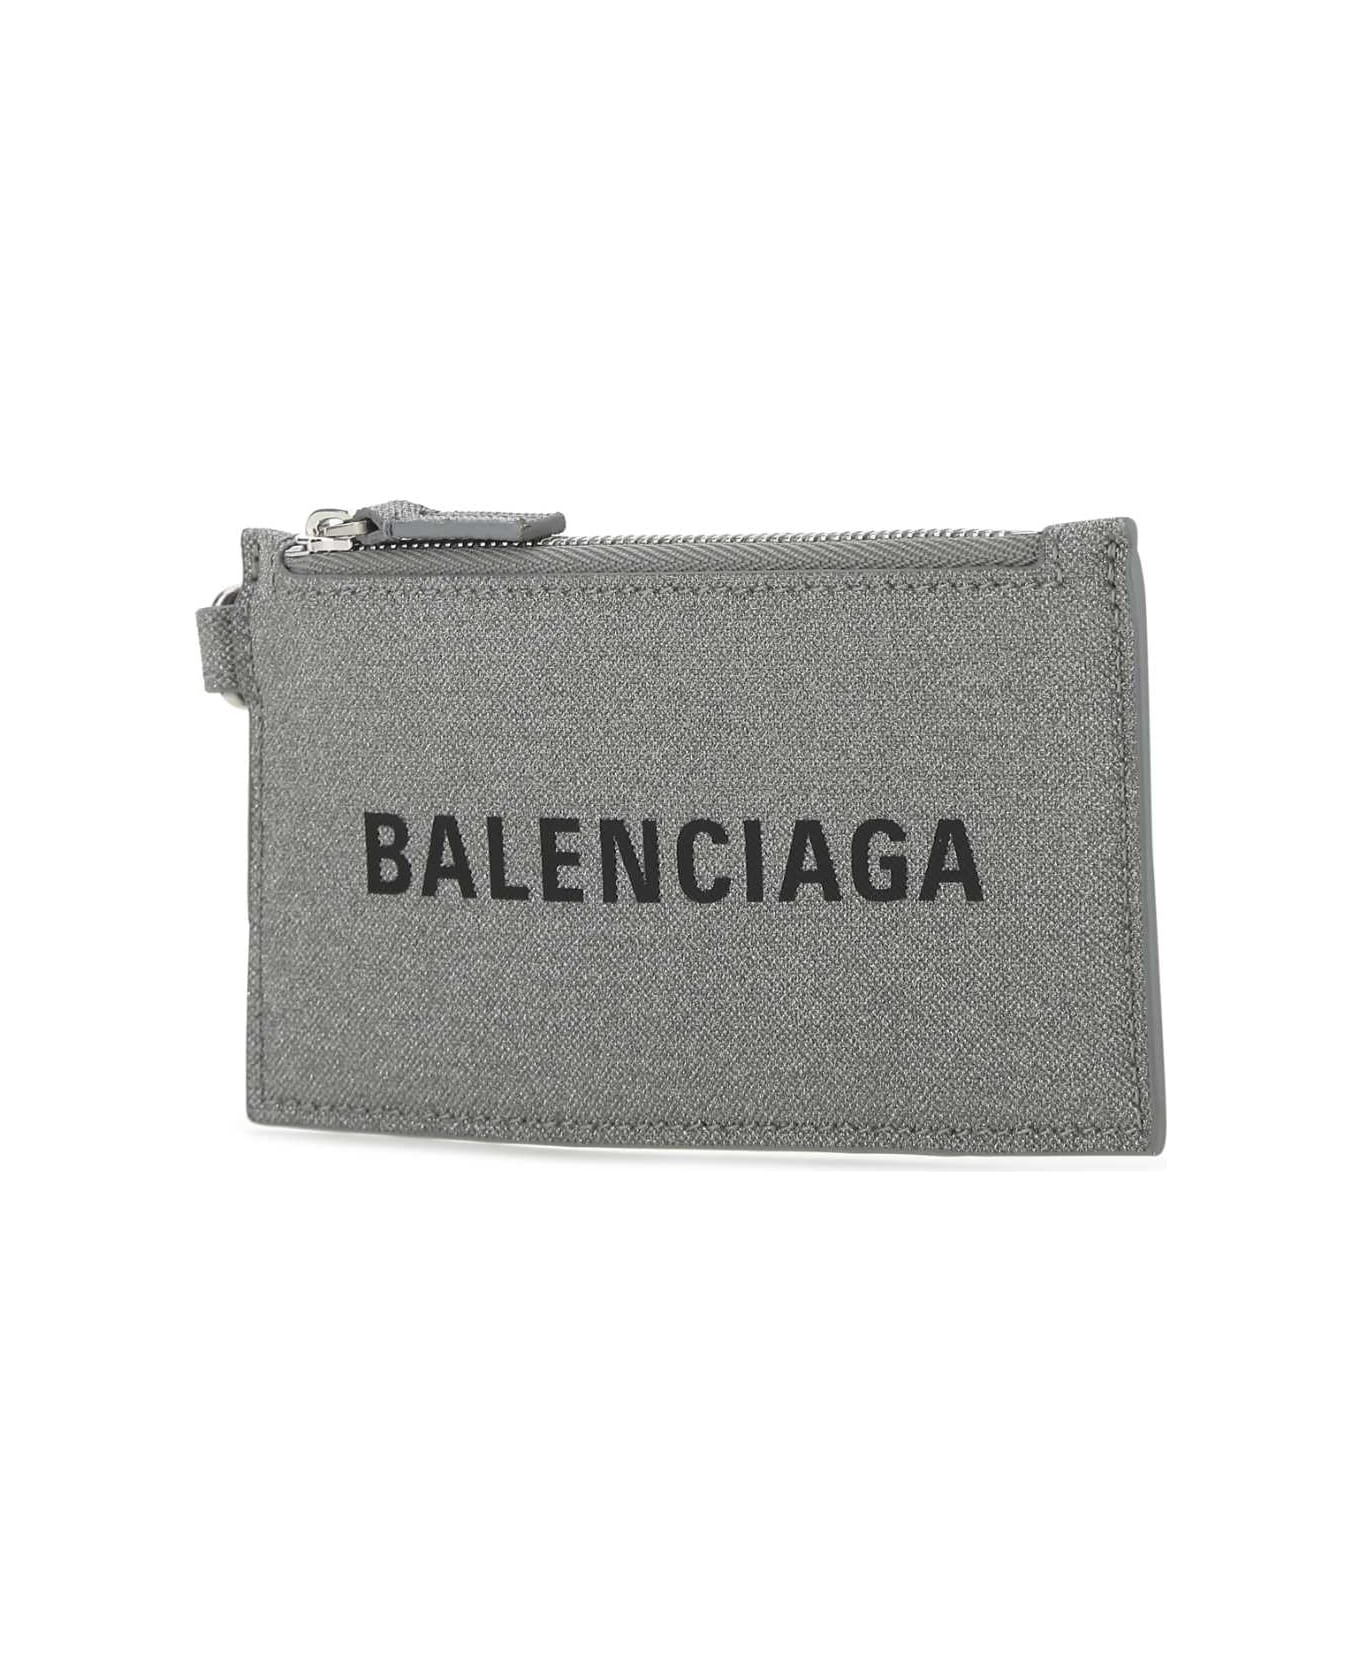 Balenciaga Grey Fabric Card Holder - 1501